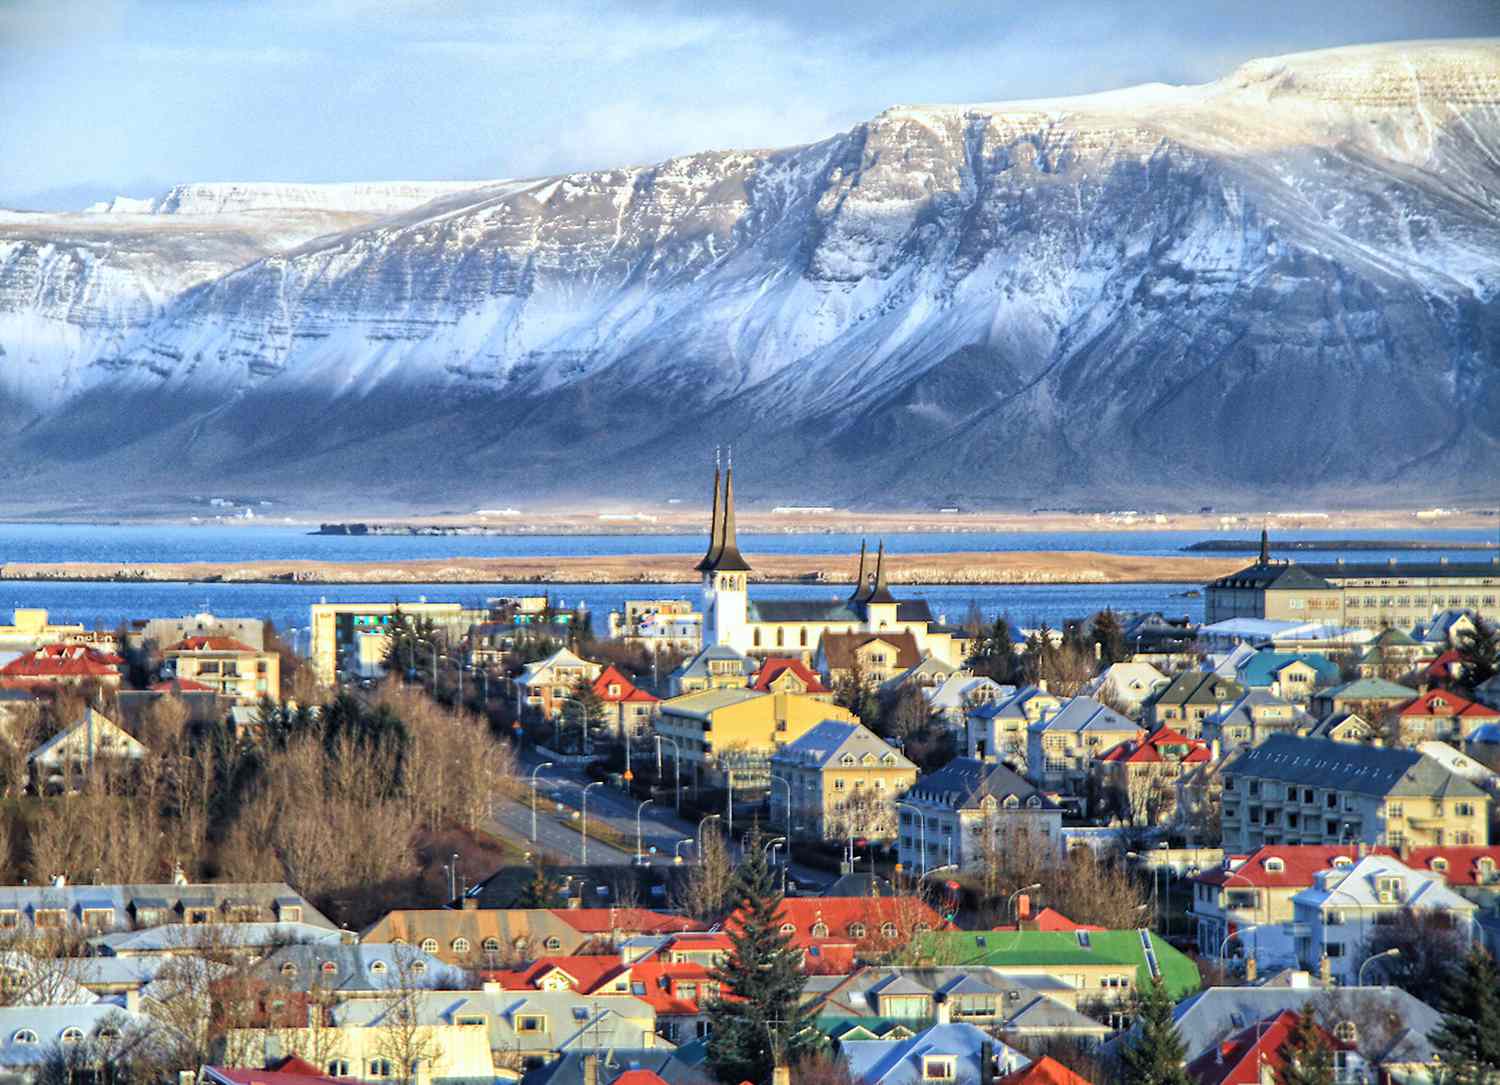 Iceland - Wikipedia